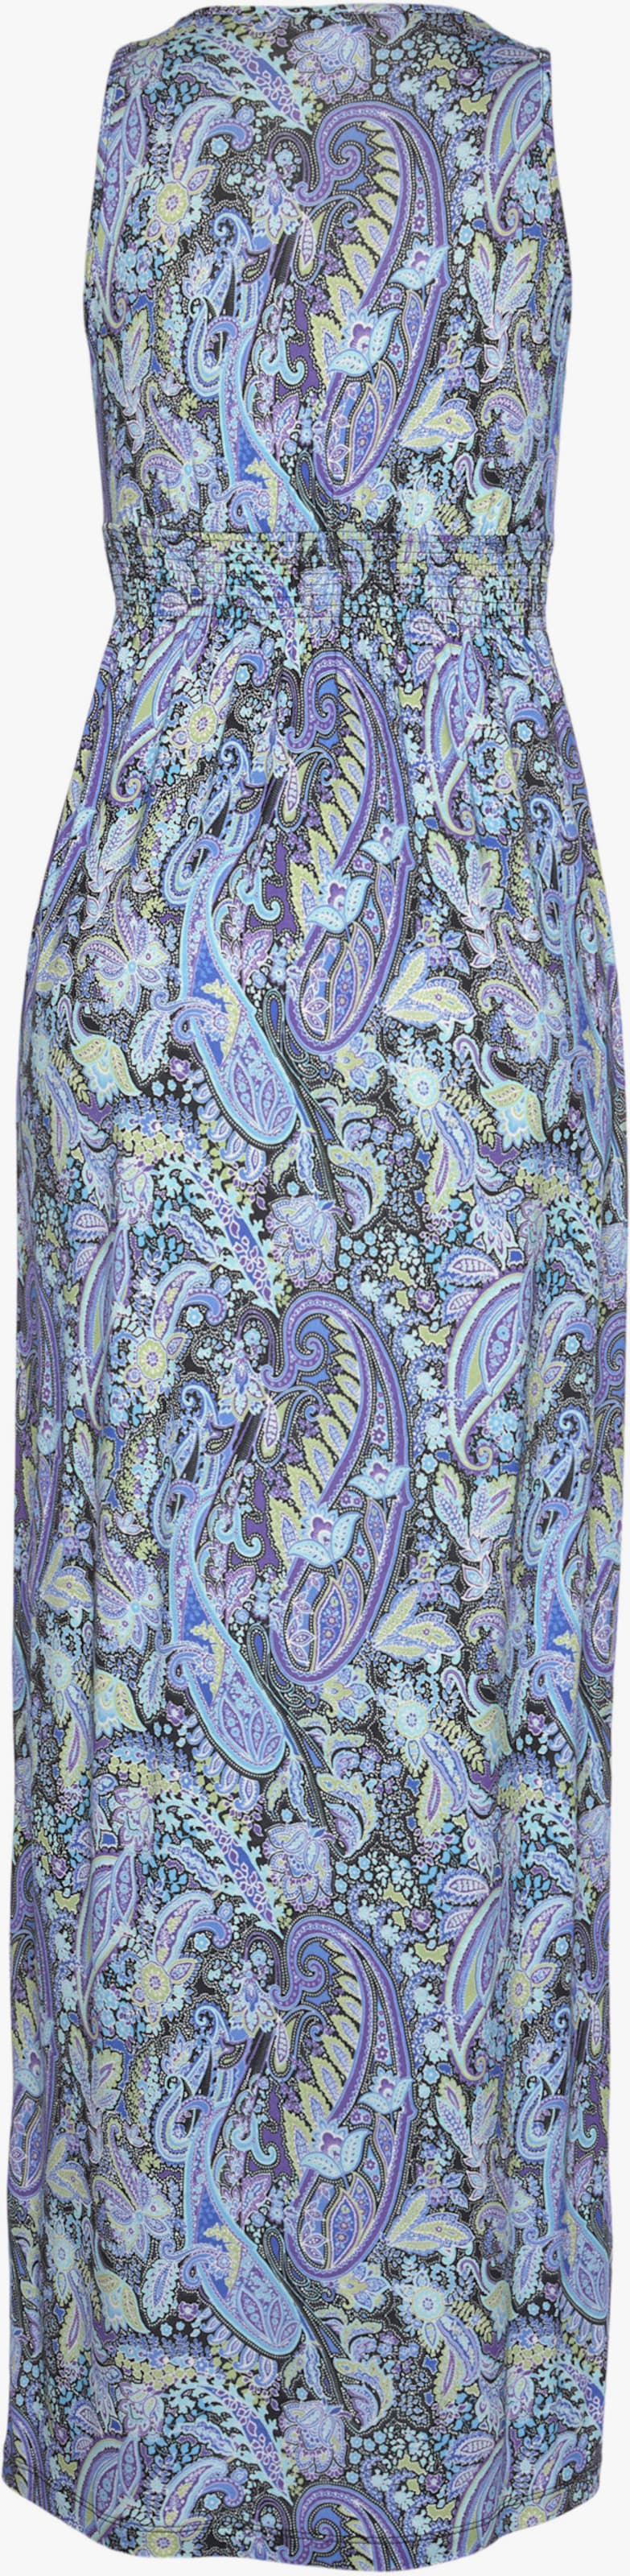 LASCANA Maxikleid - blau-bedruckt